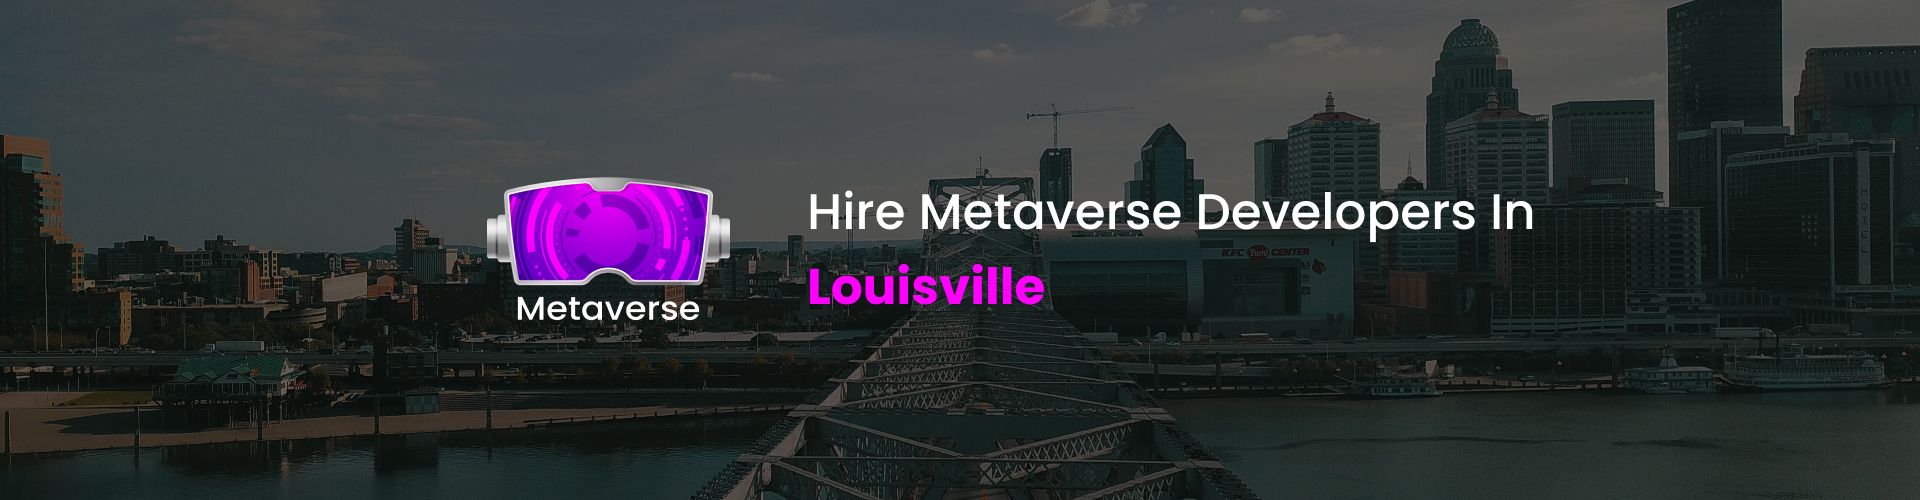 hire metaverse developers in louisville